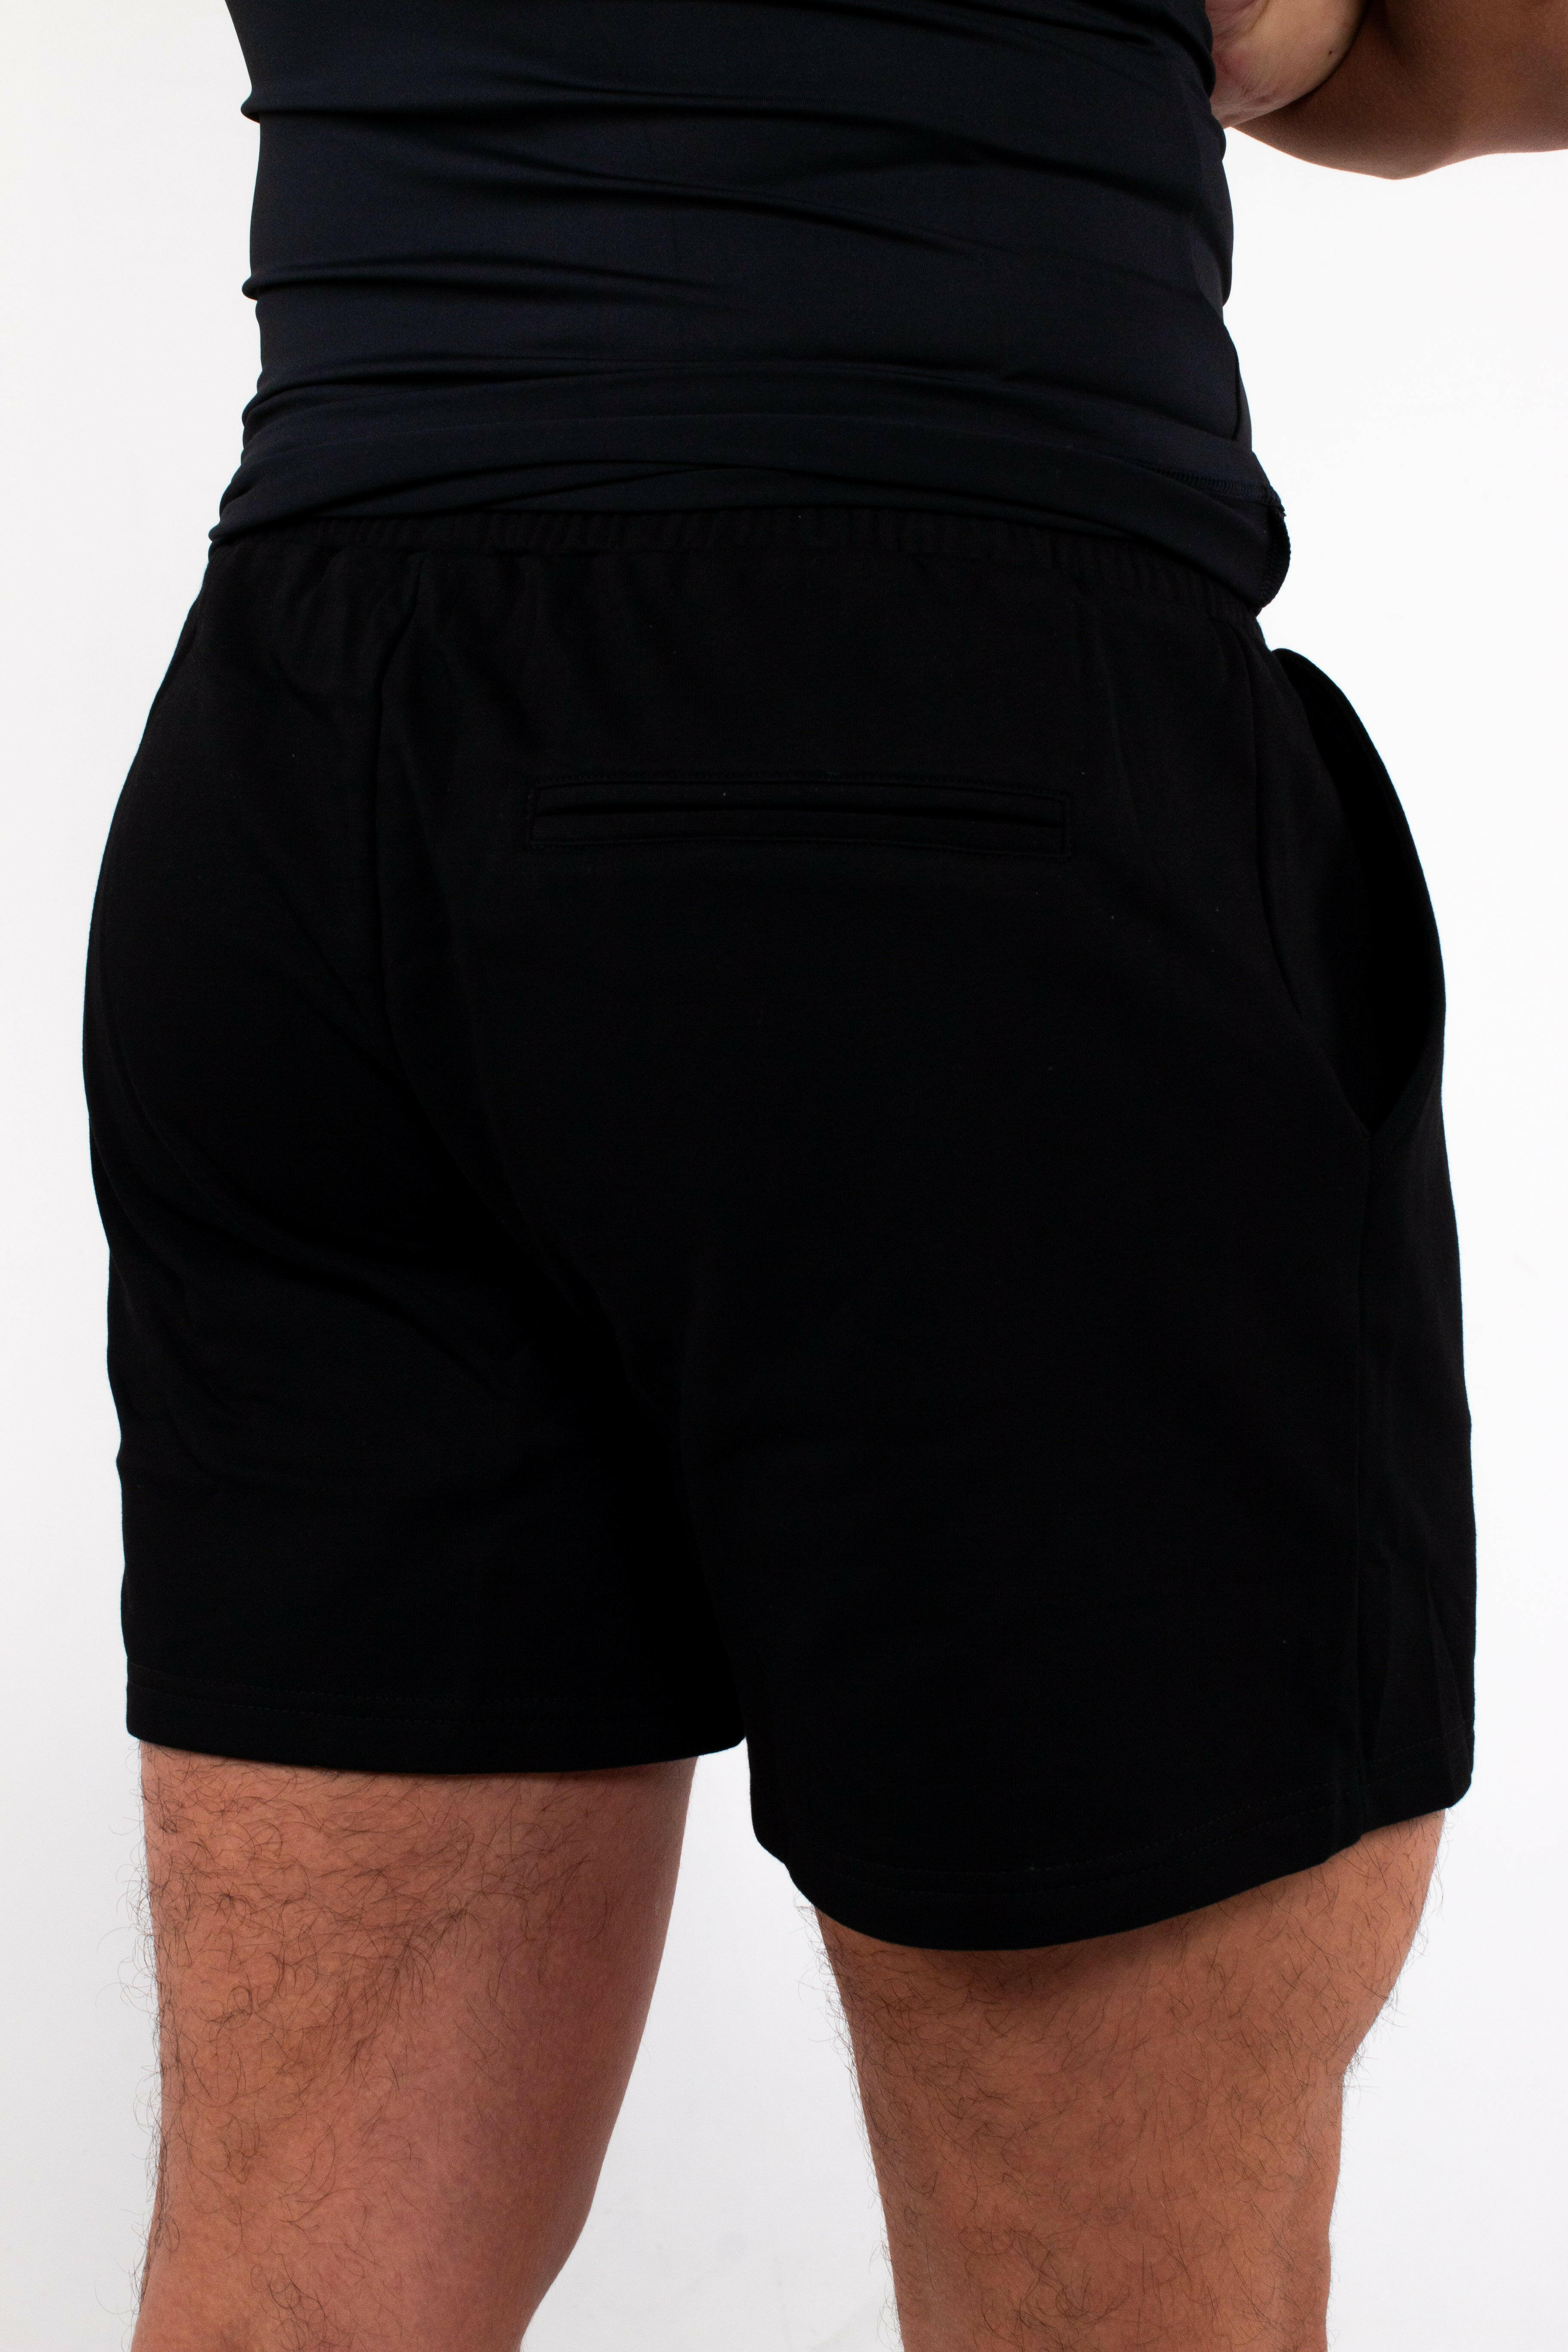 Black workout shorts.